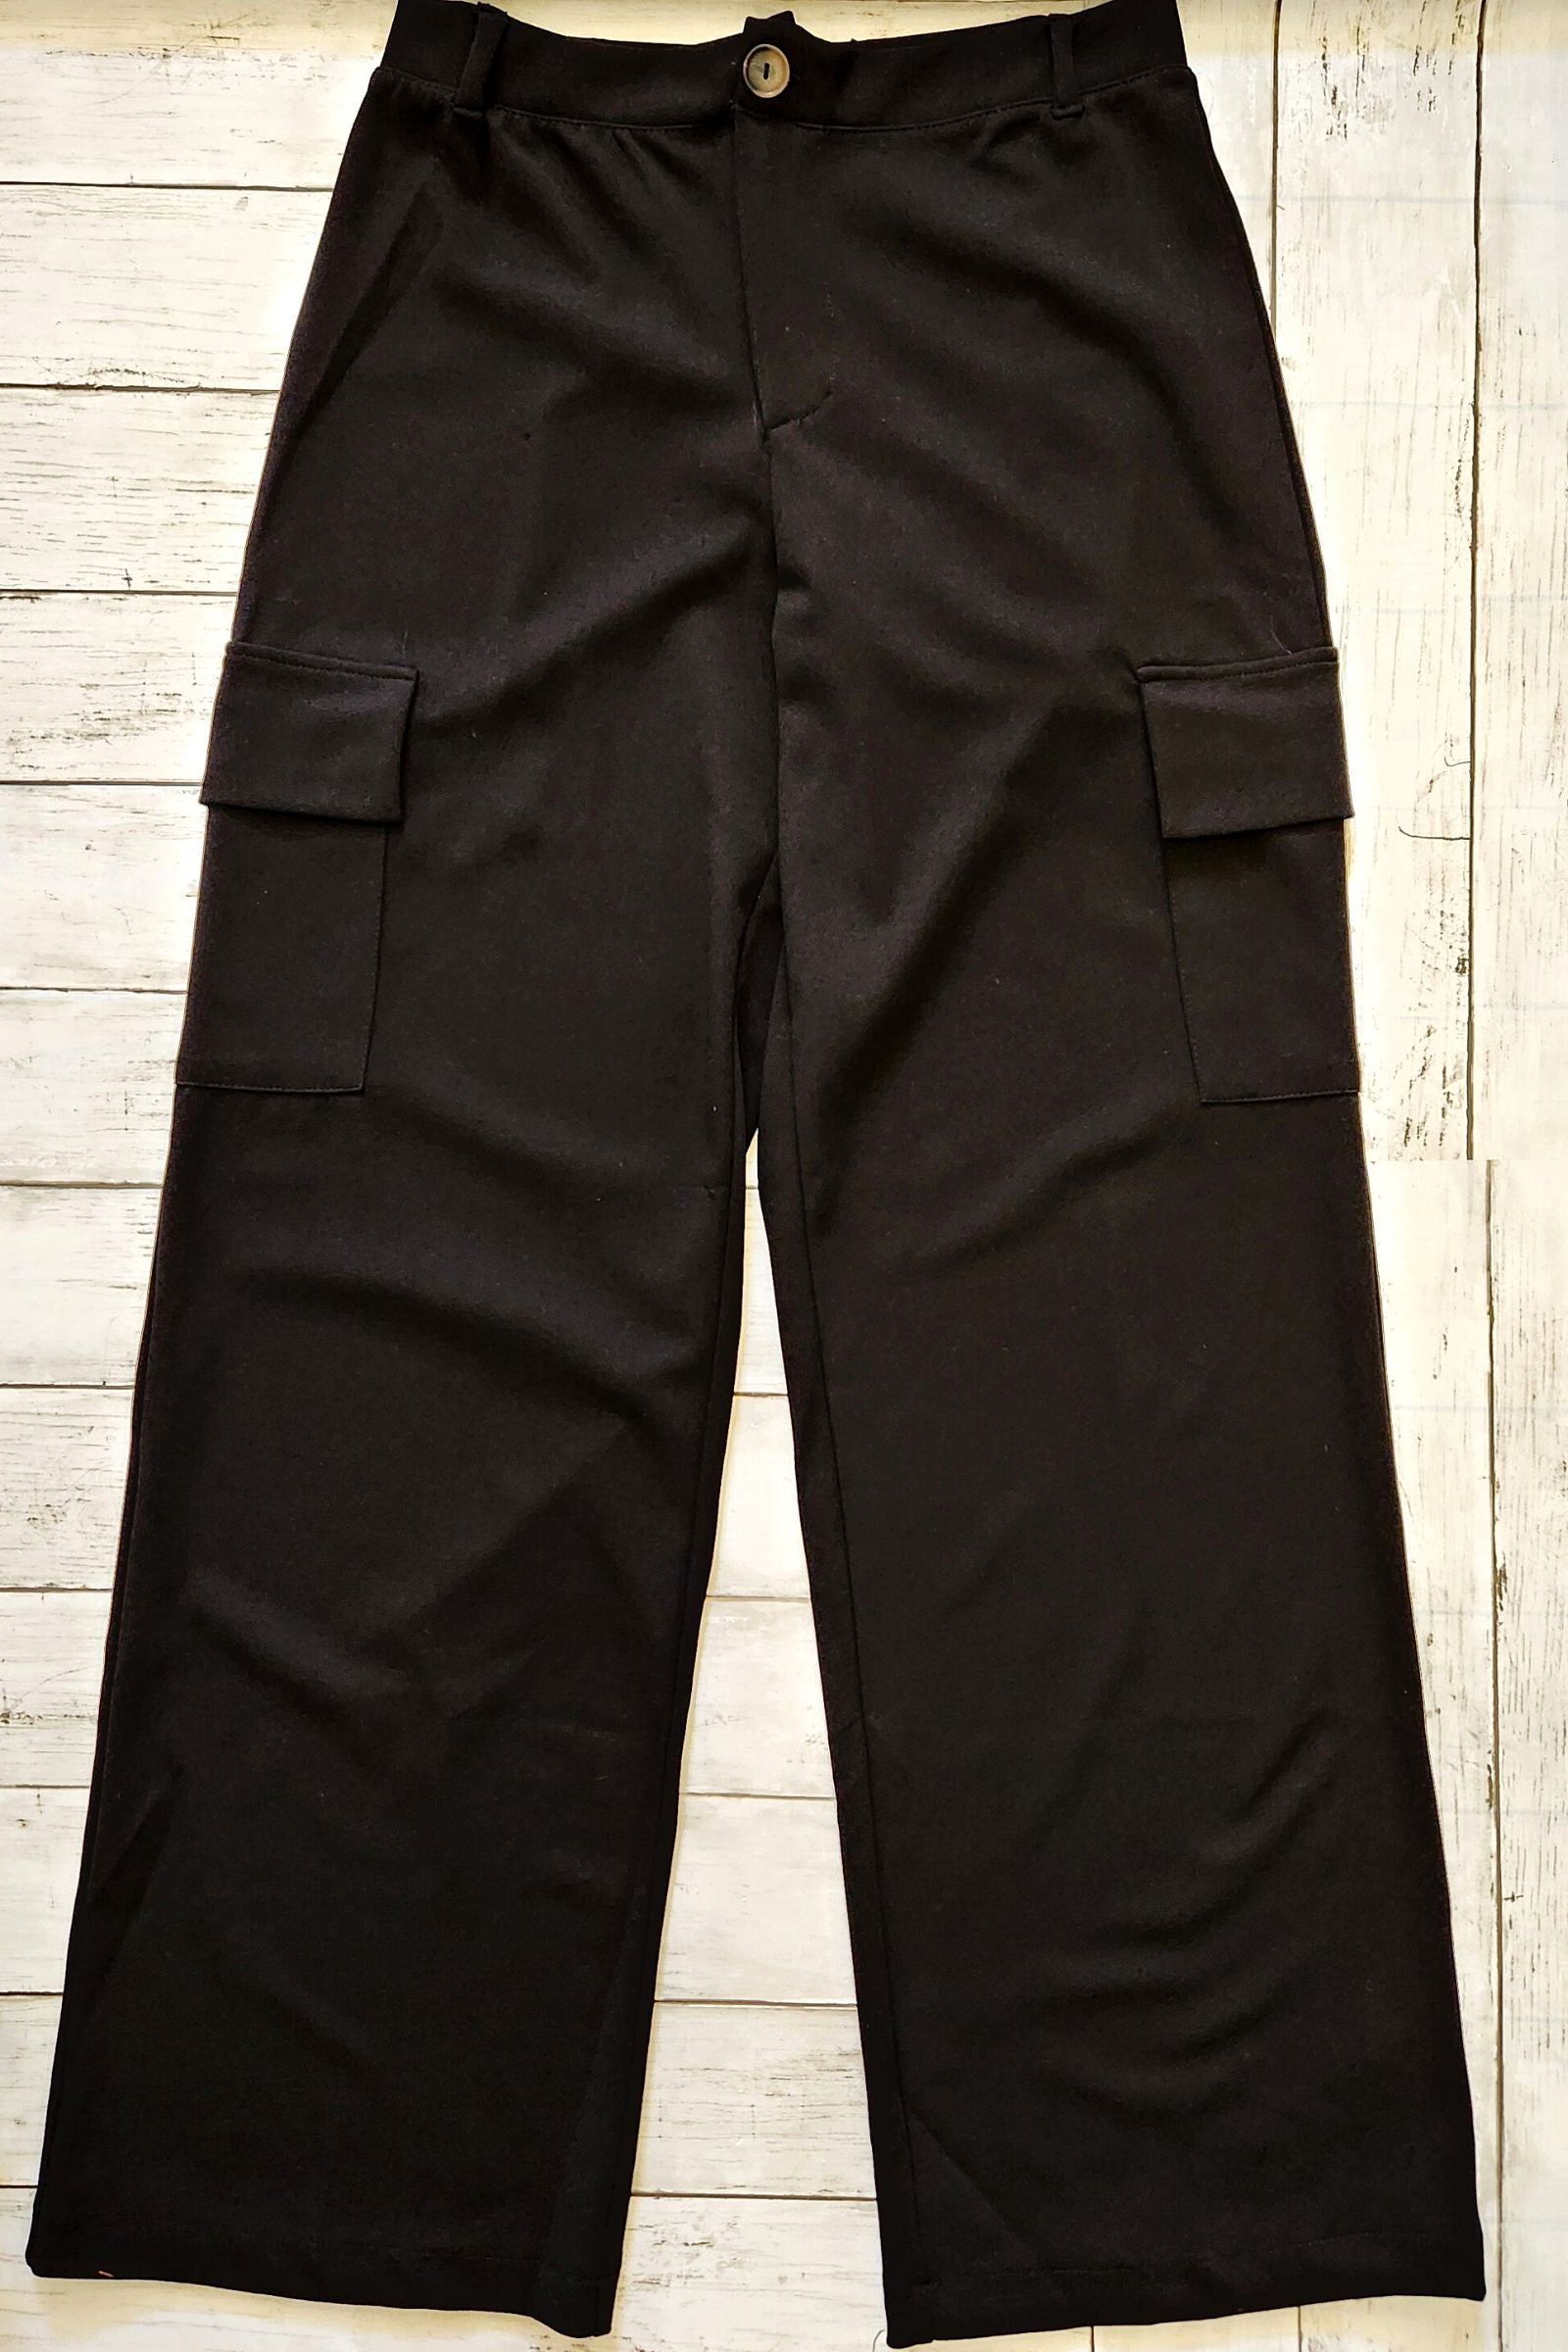 Black Stretch Cargo Pants